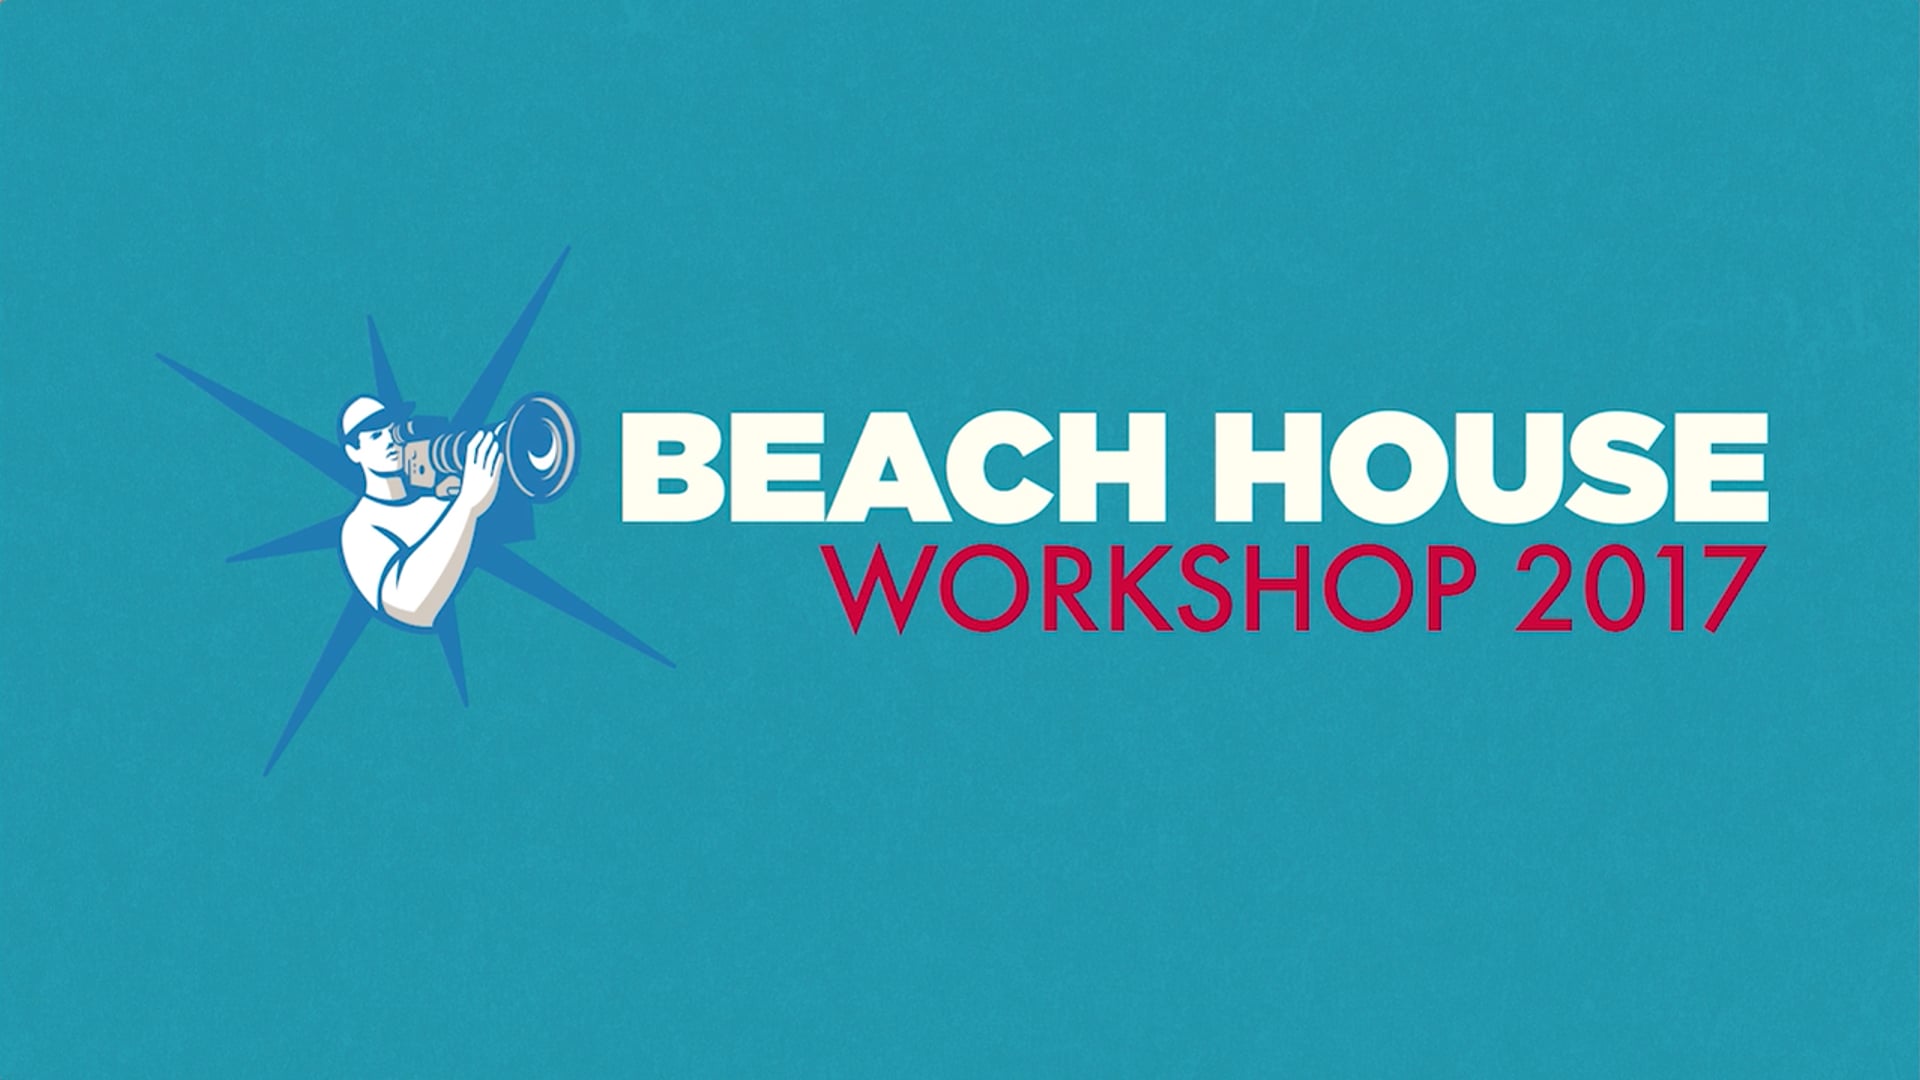 Highlights of Beach House Workshop 2017